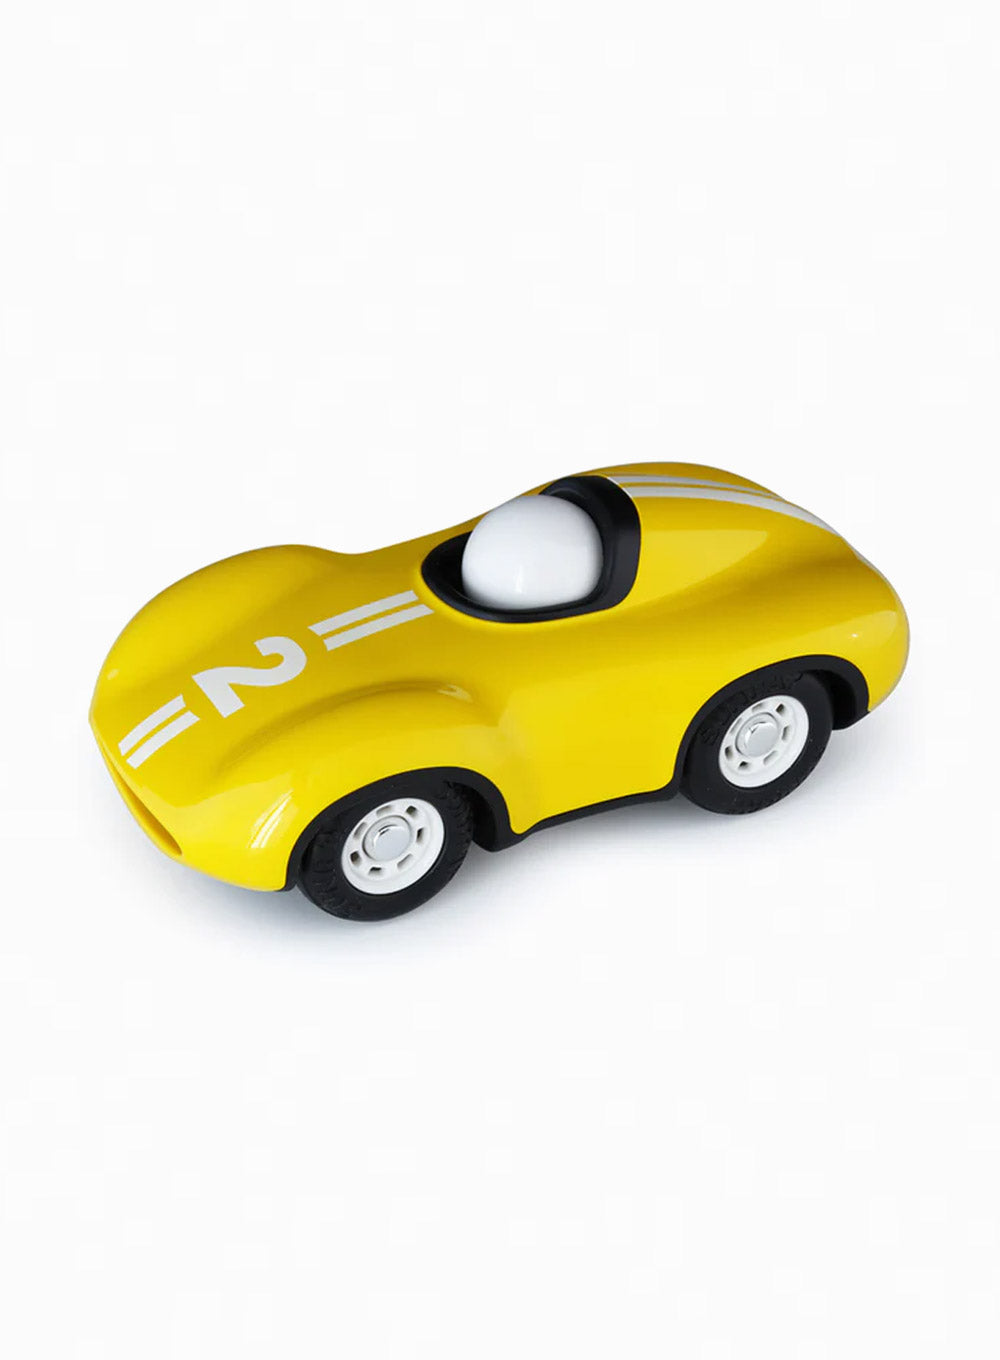 Playforever 703 Speedy Le Mans Yellow Toy Car